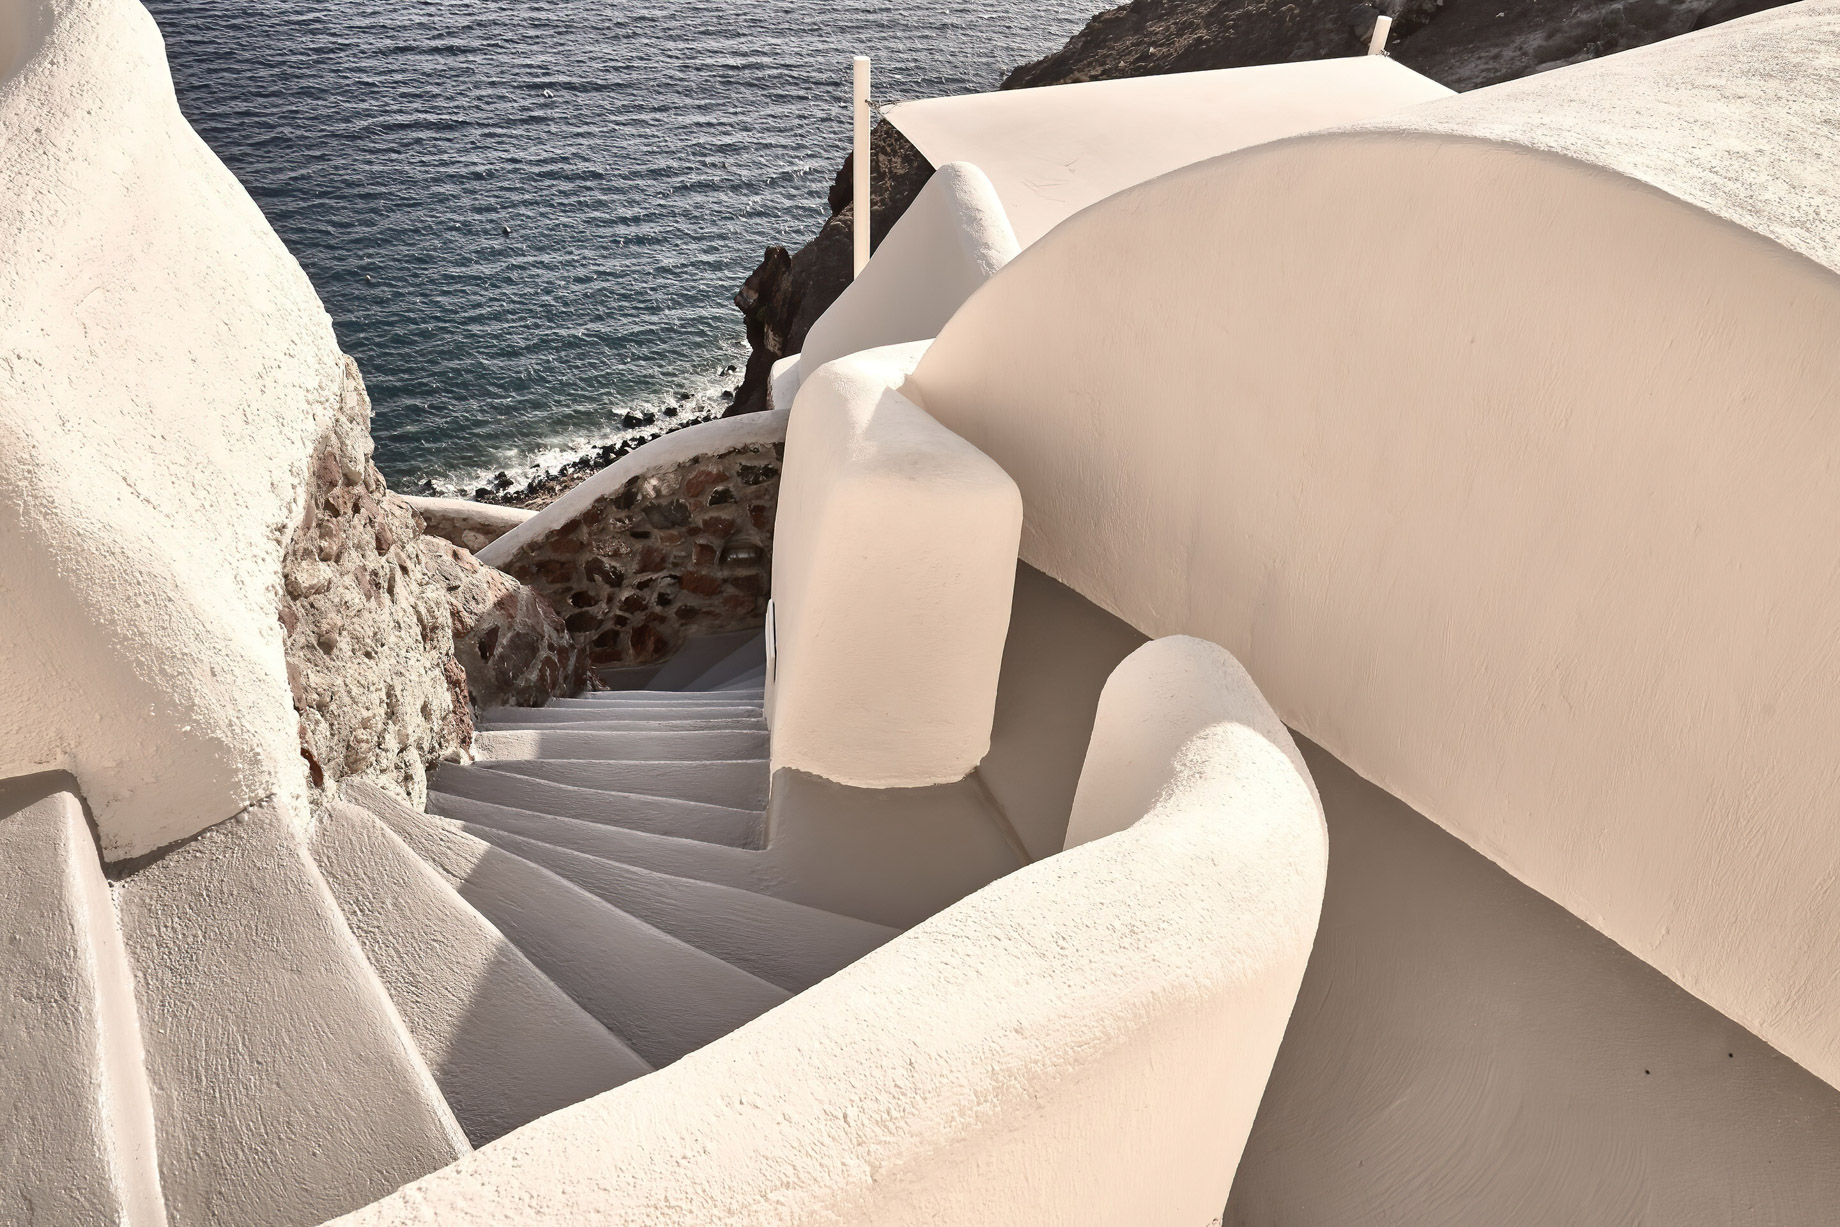 Mystique Hotel Santorini – Oia, Santorini Island, Greece - Cycladic Architecture Stair Detail